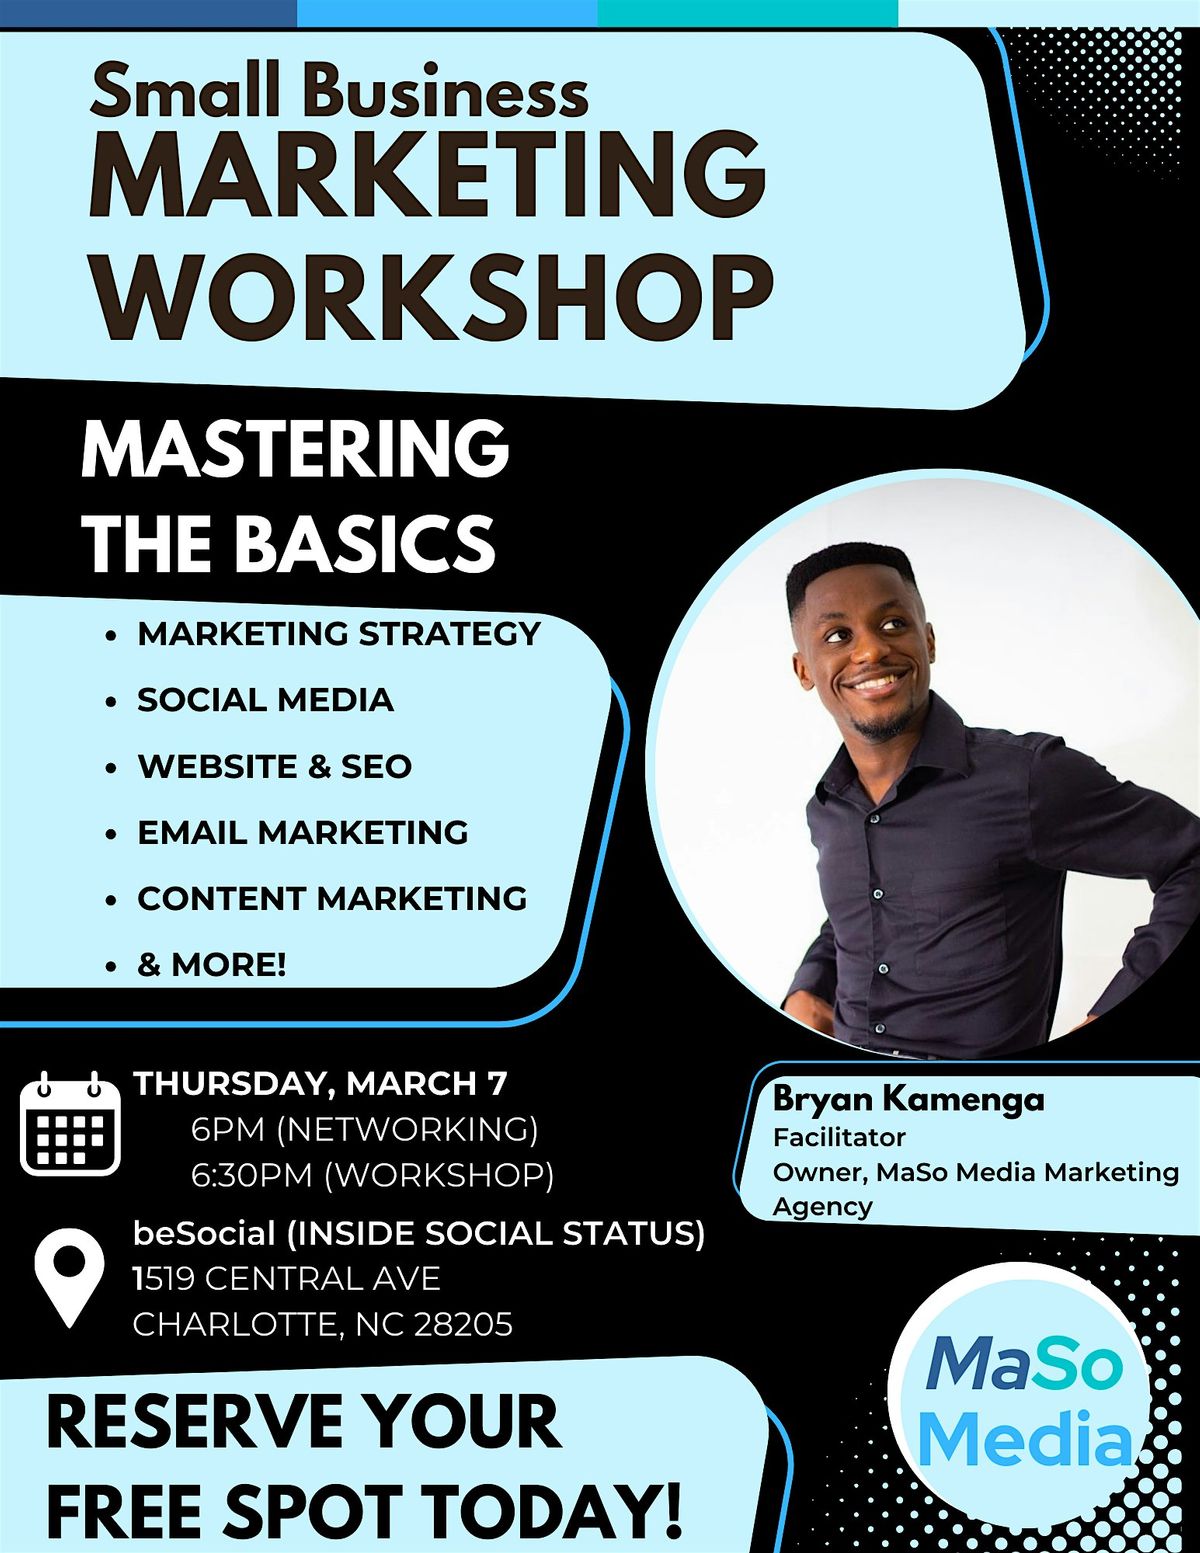 Small Business Marketing Workshop: Mastering the Basics